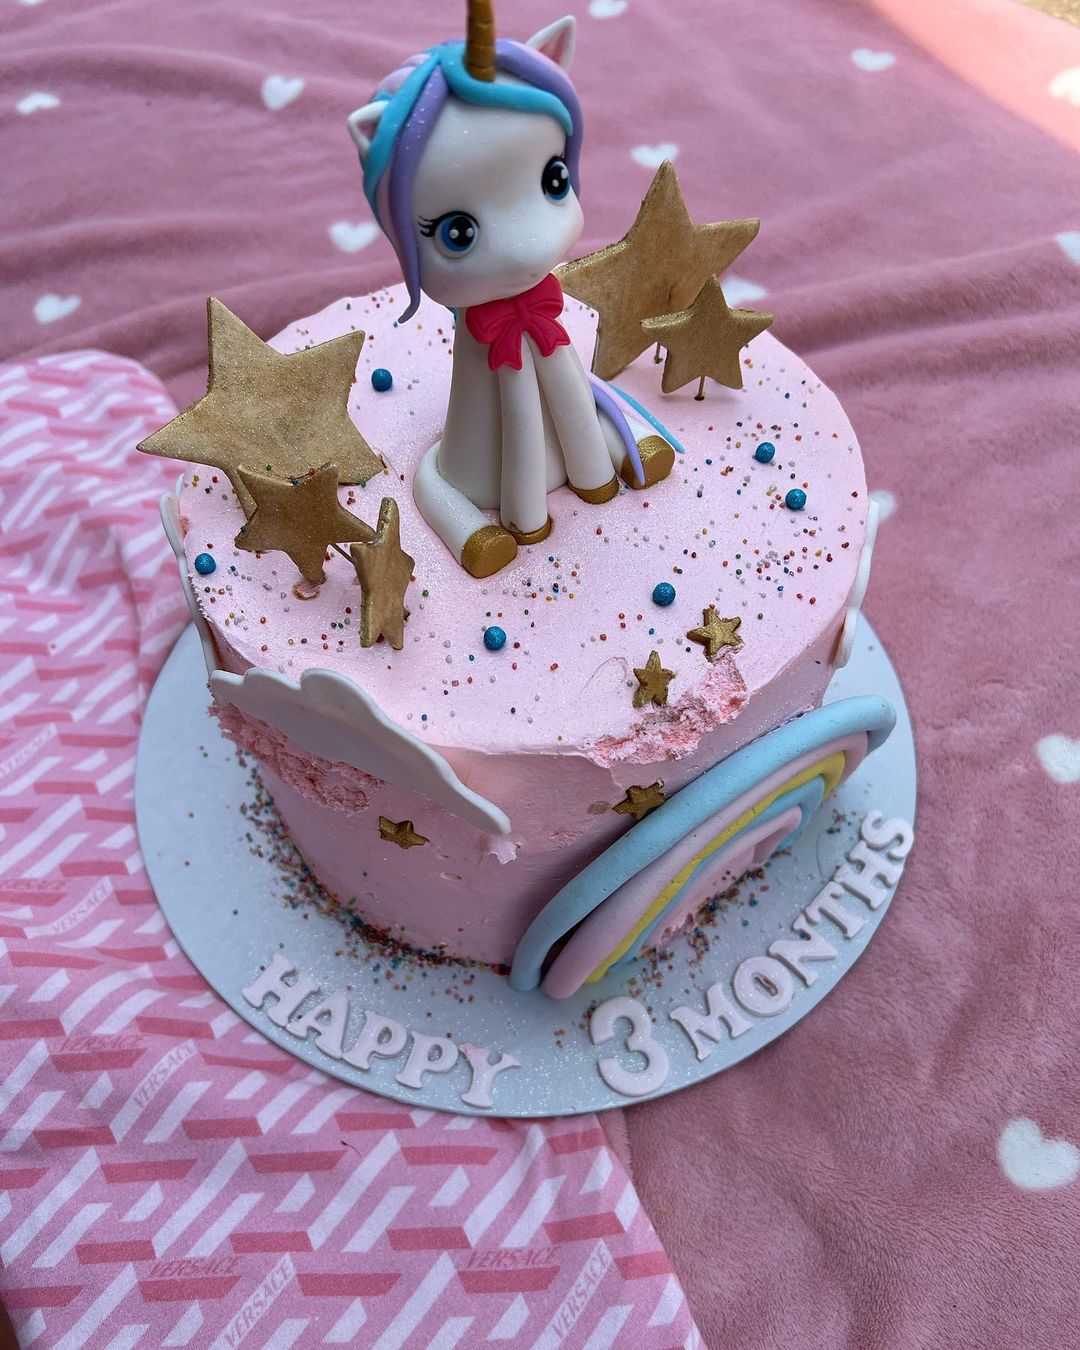 Londie London's daughter's celebration cake